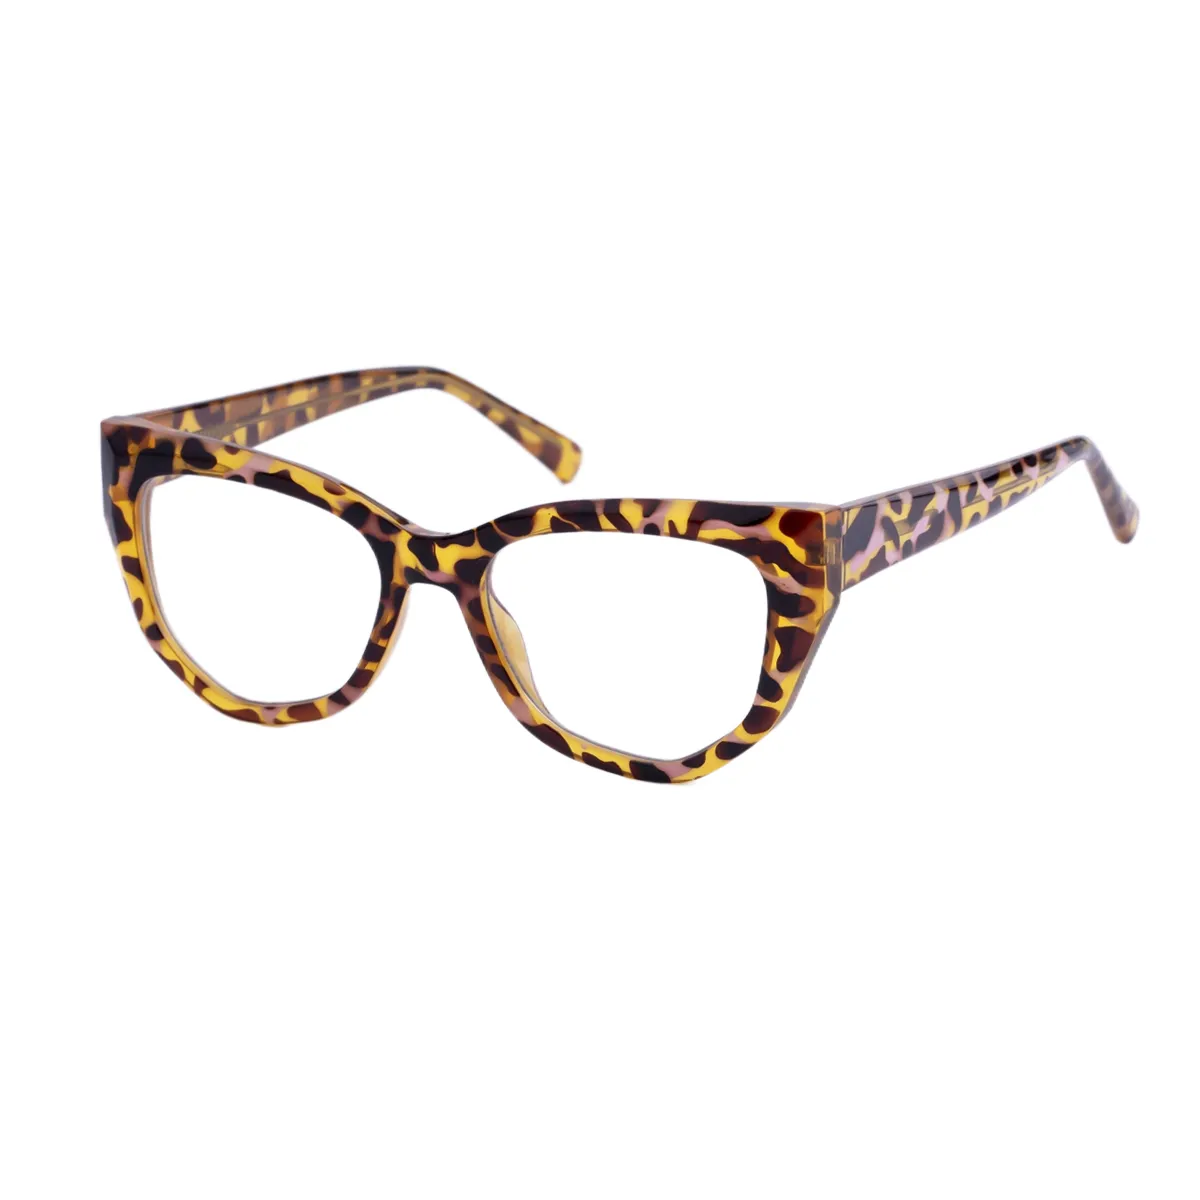 Hedy - Geometric Tortoiseshell Glasses for Women